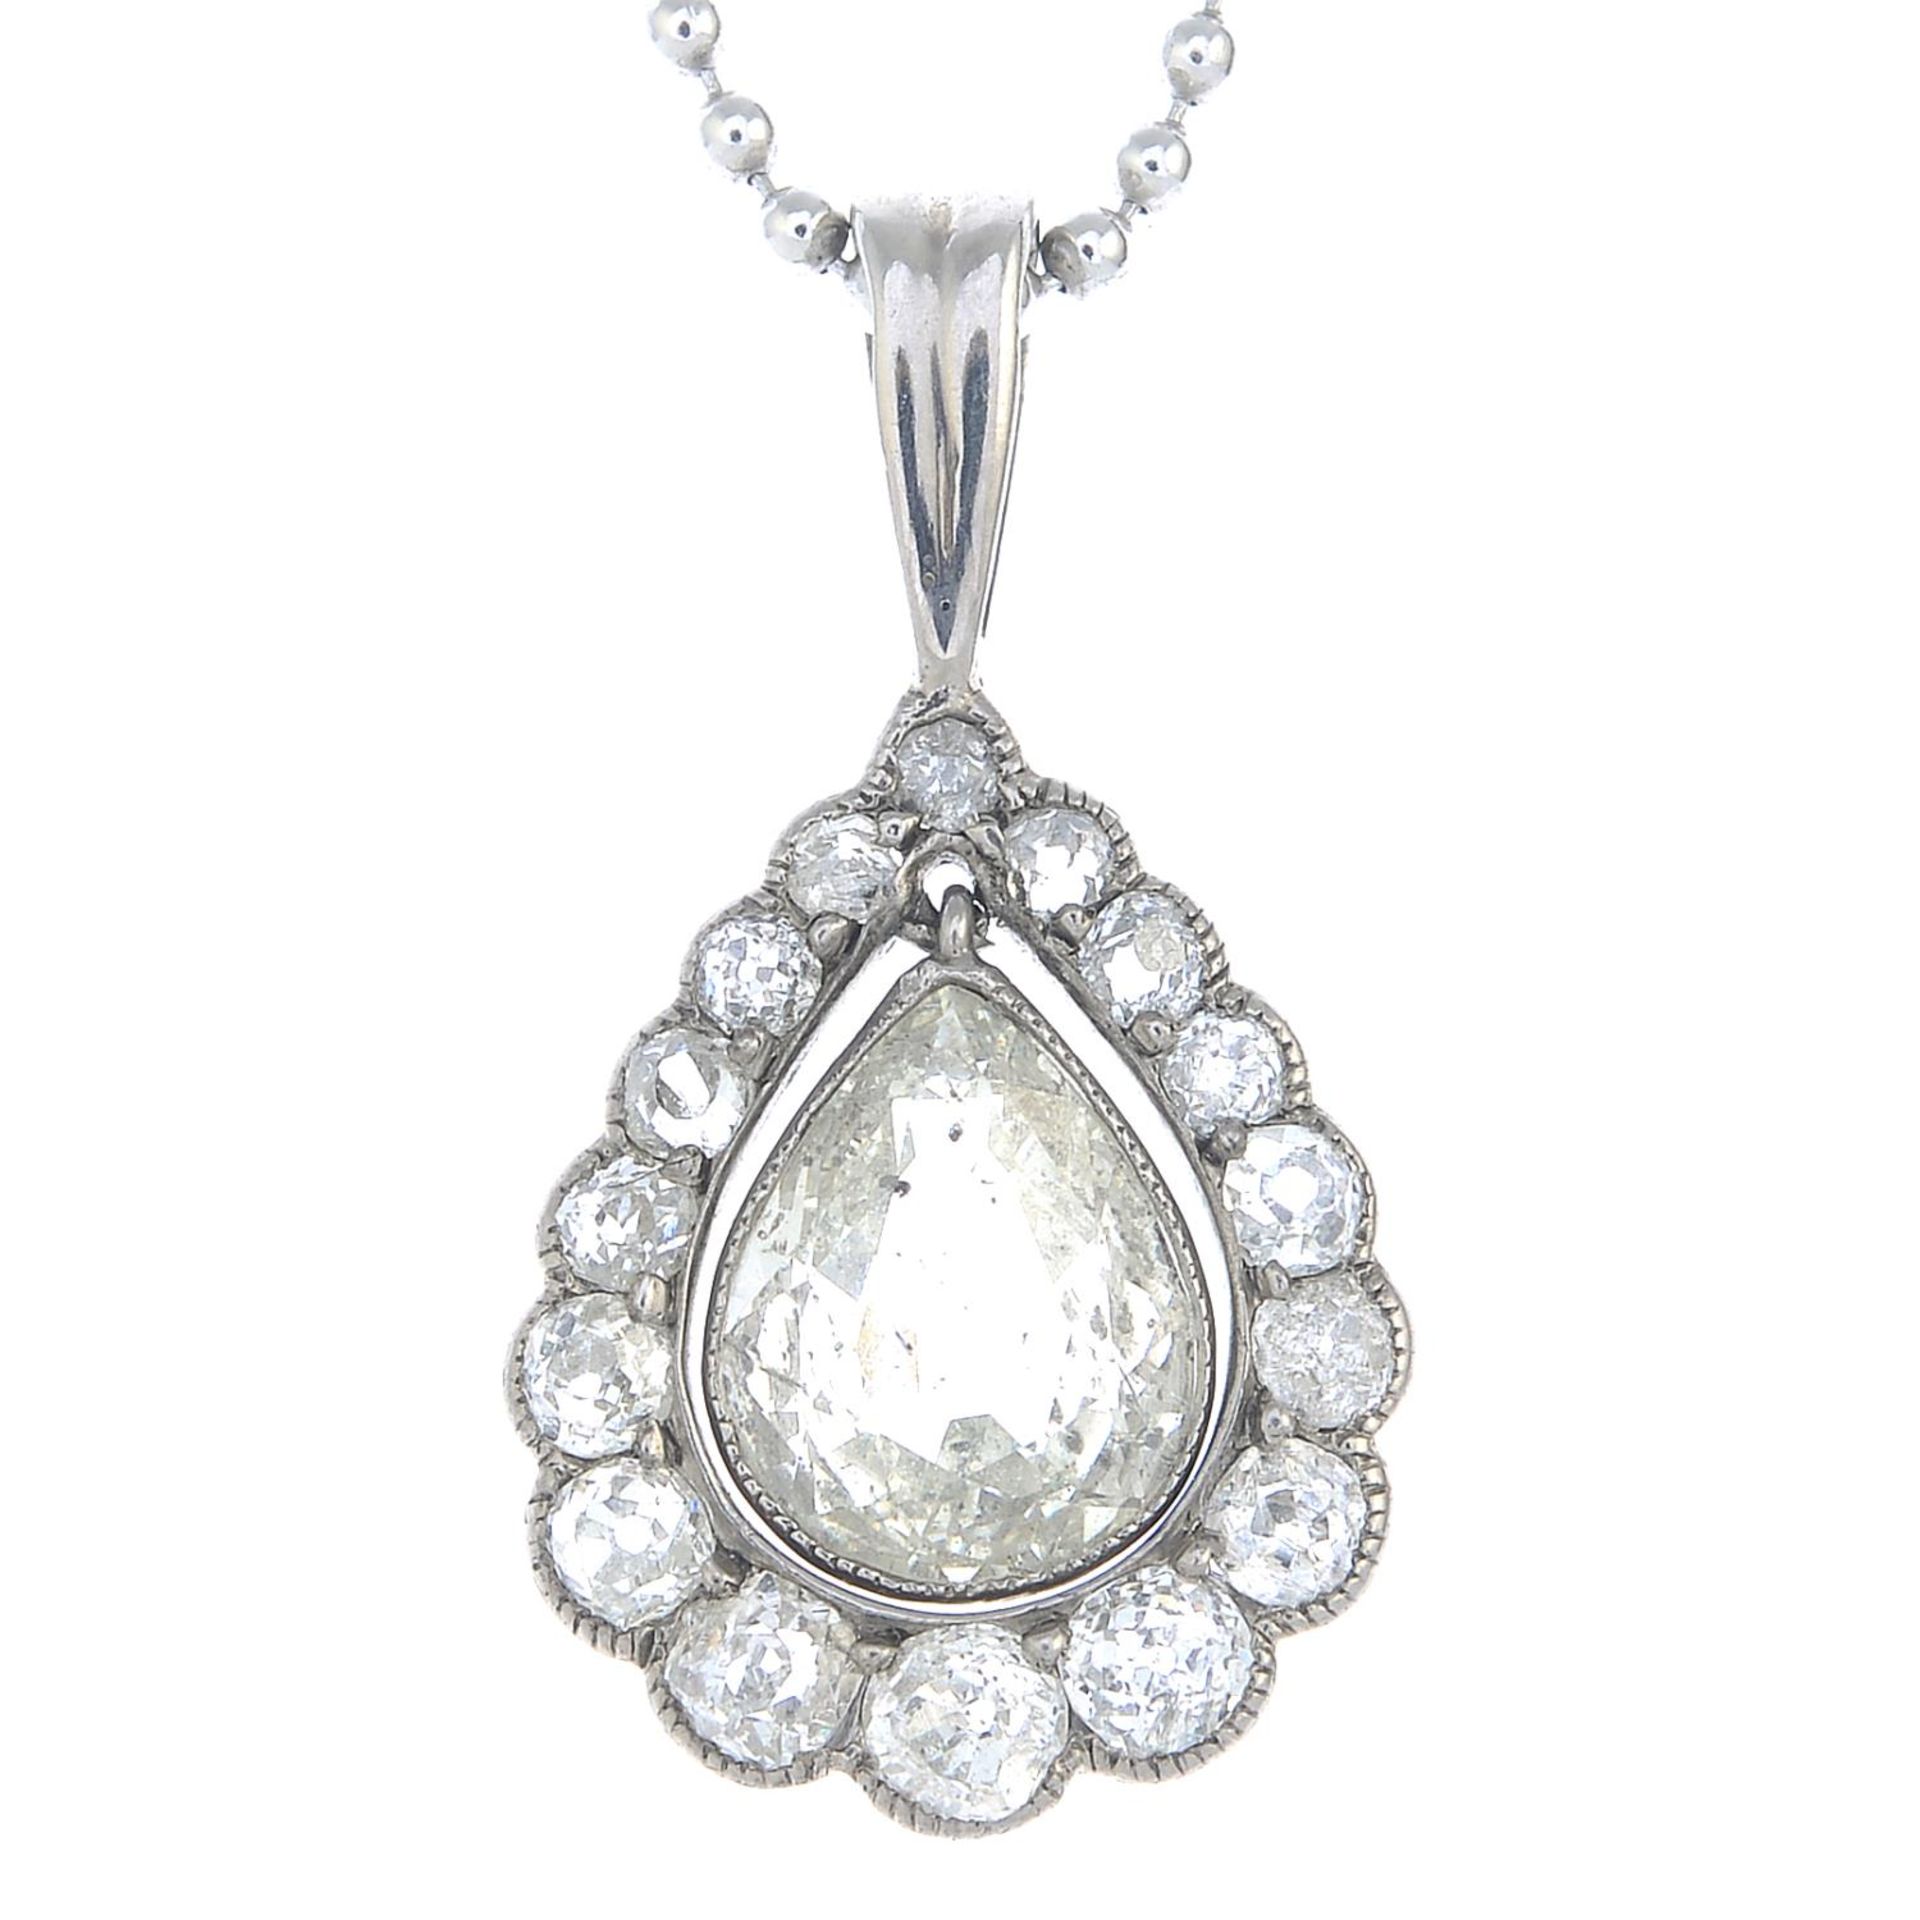 A pear-shape diamond,